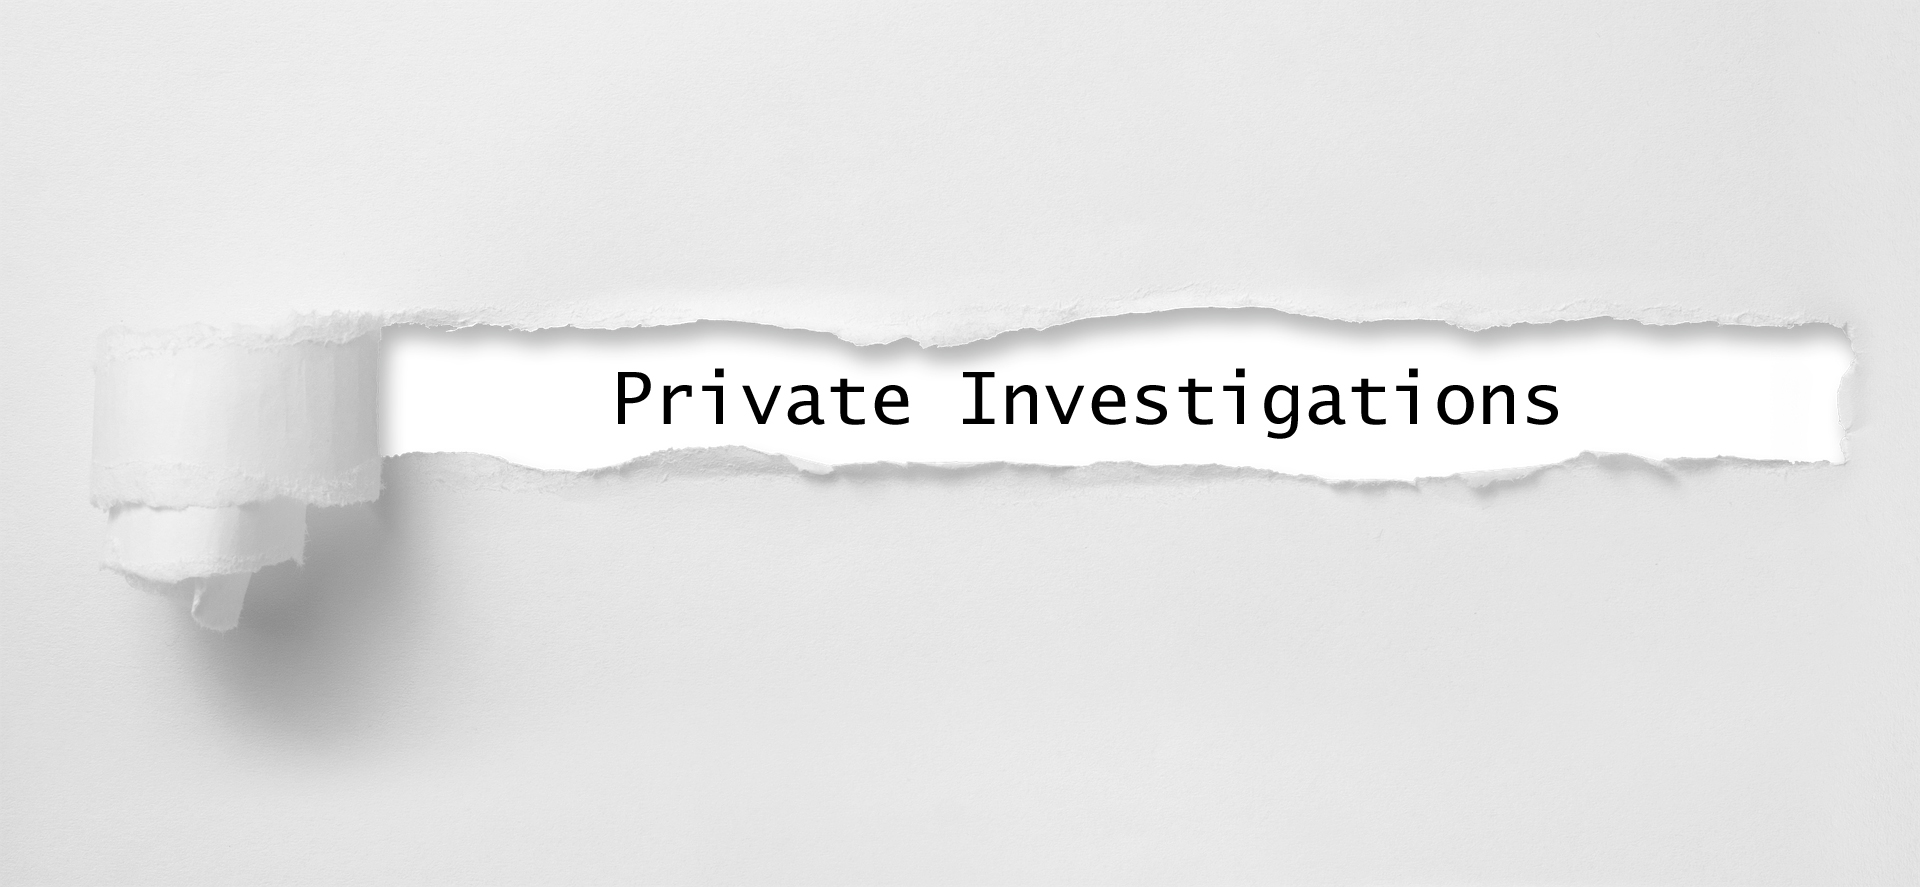 Top 5 Requests Private Investigators Can’t Legally Fulfill